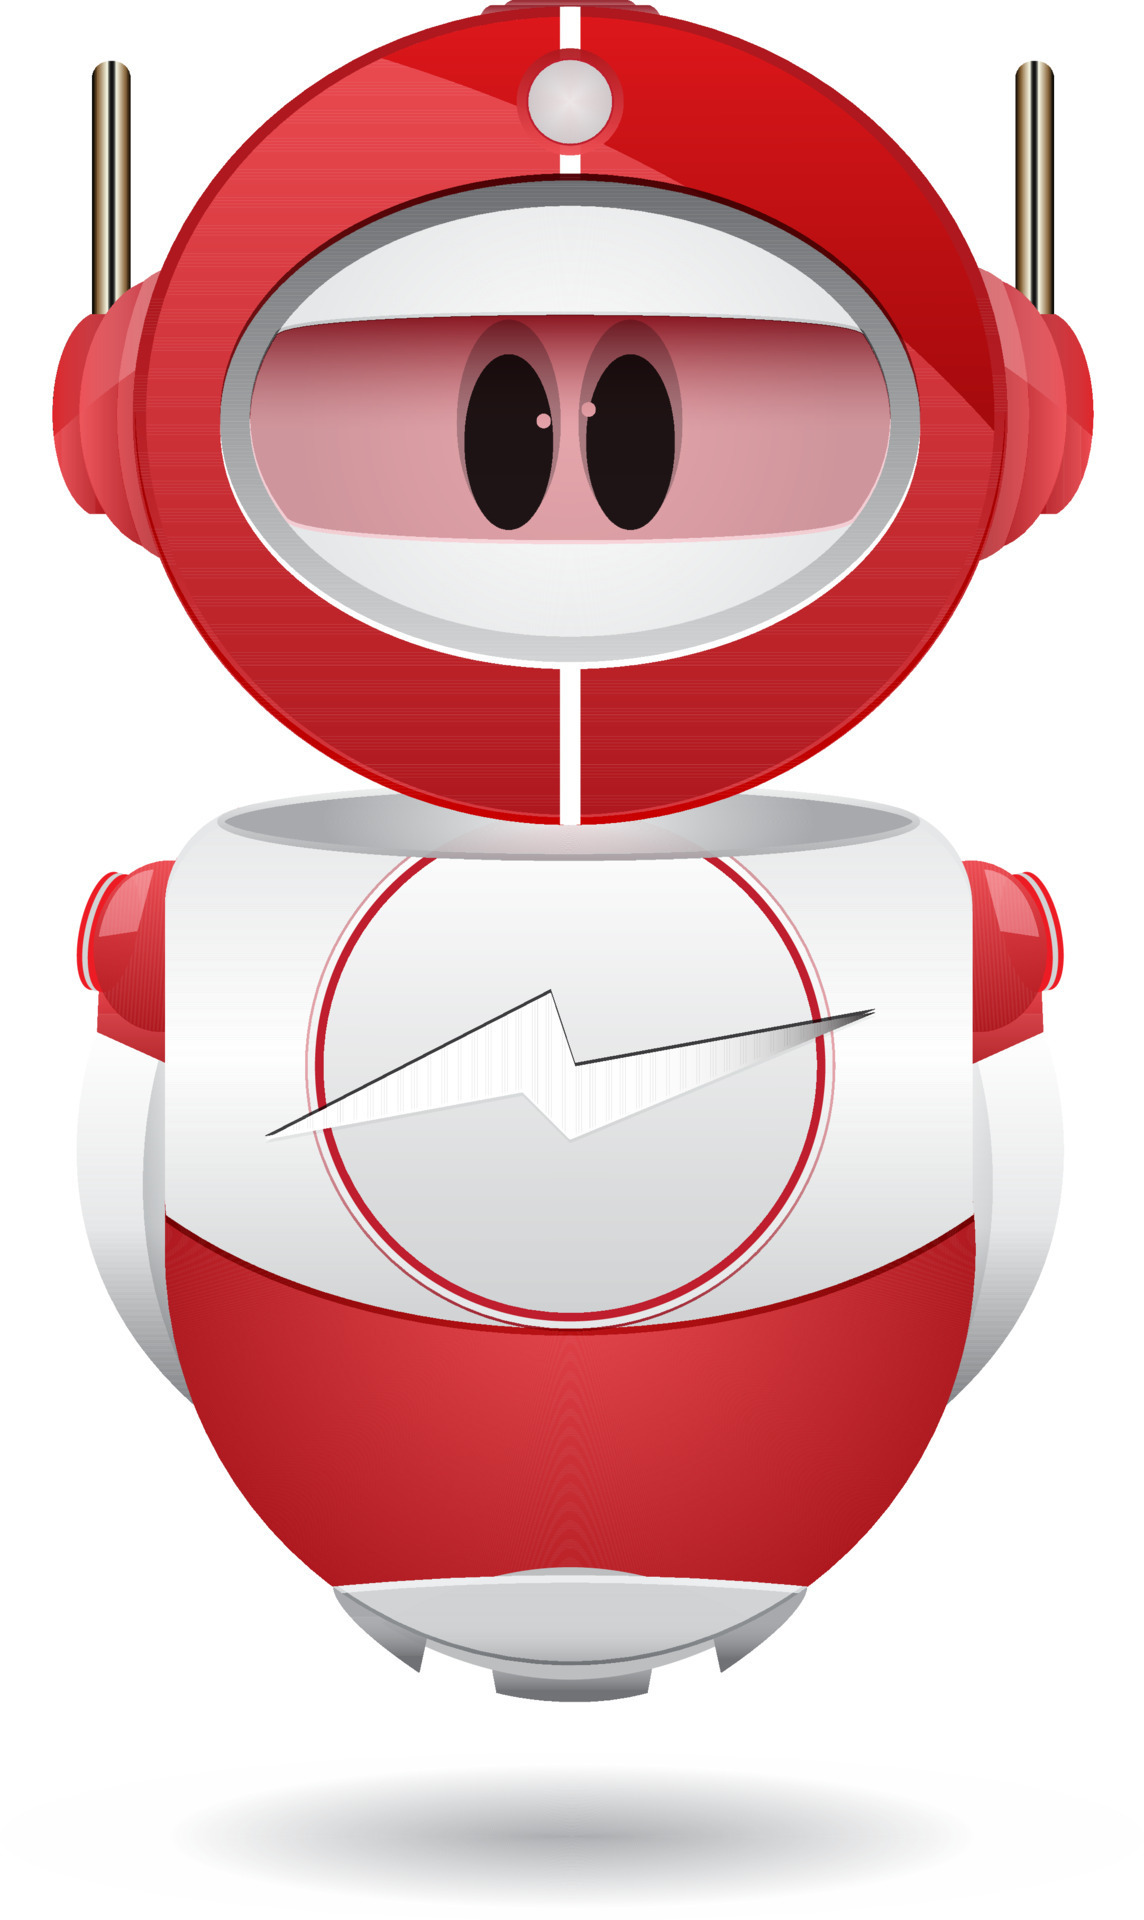 Free Vectors  red robot catcher icon